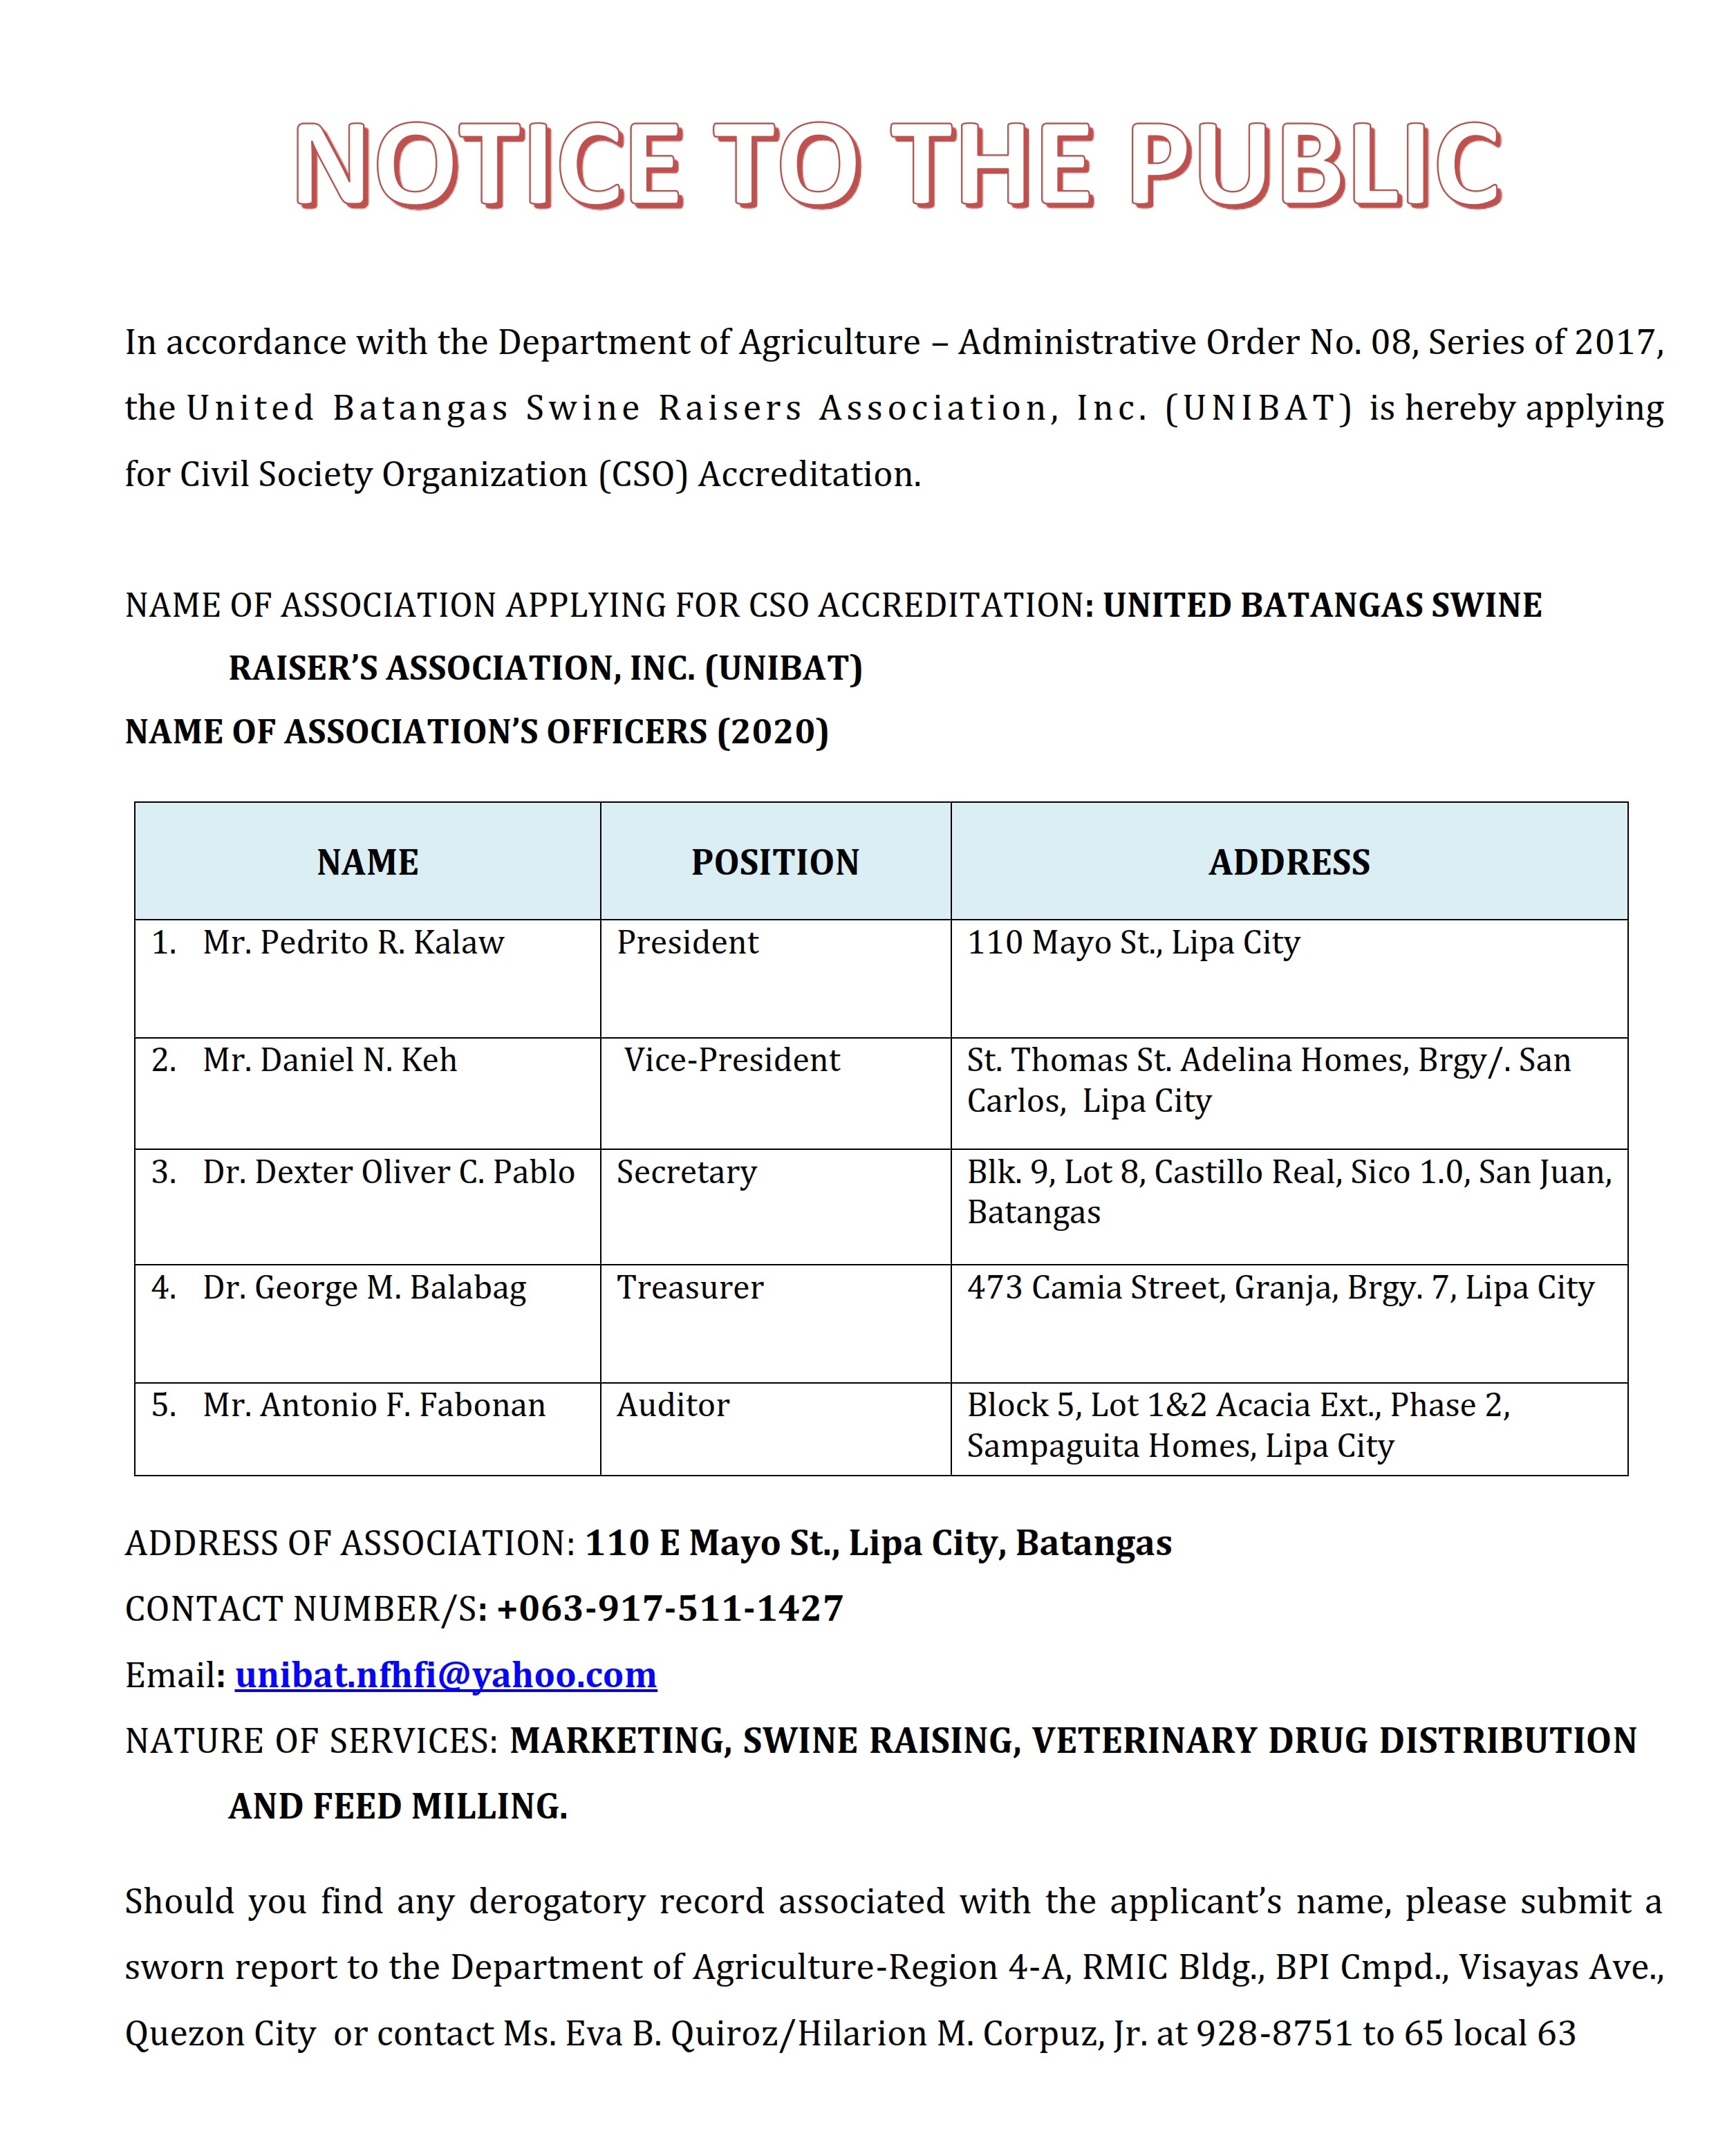 notice to public unibat applying for cso accreditation june 2020